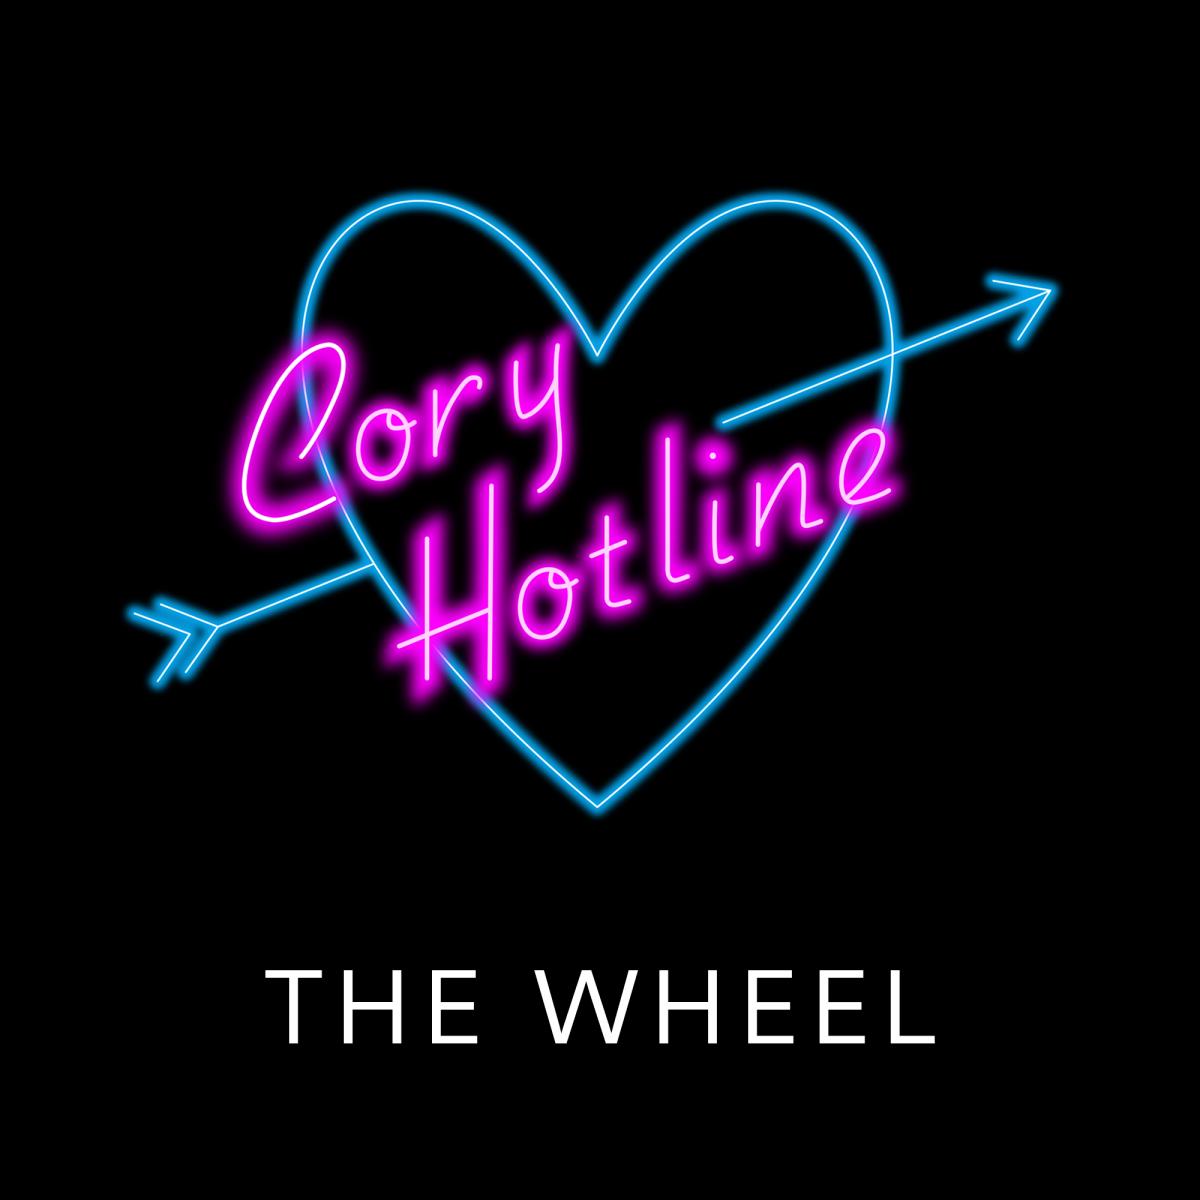 The Wheel Cory Hotline